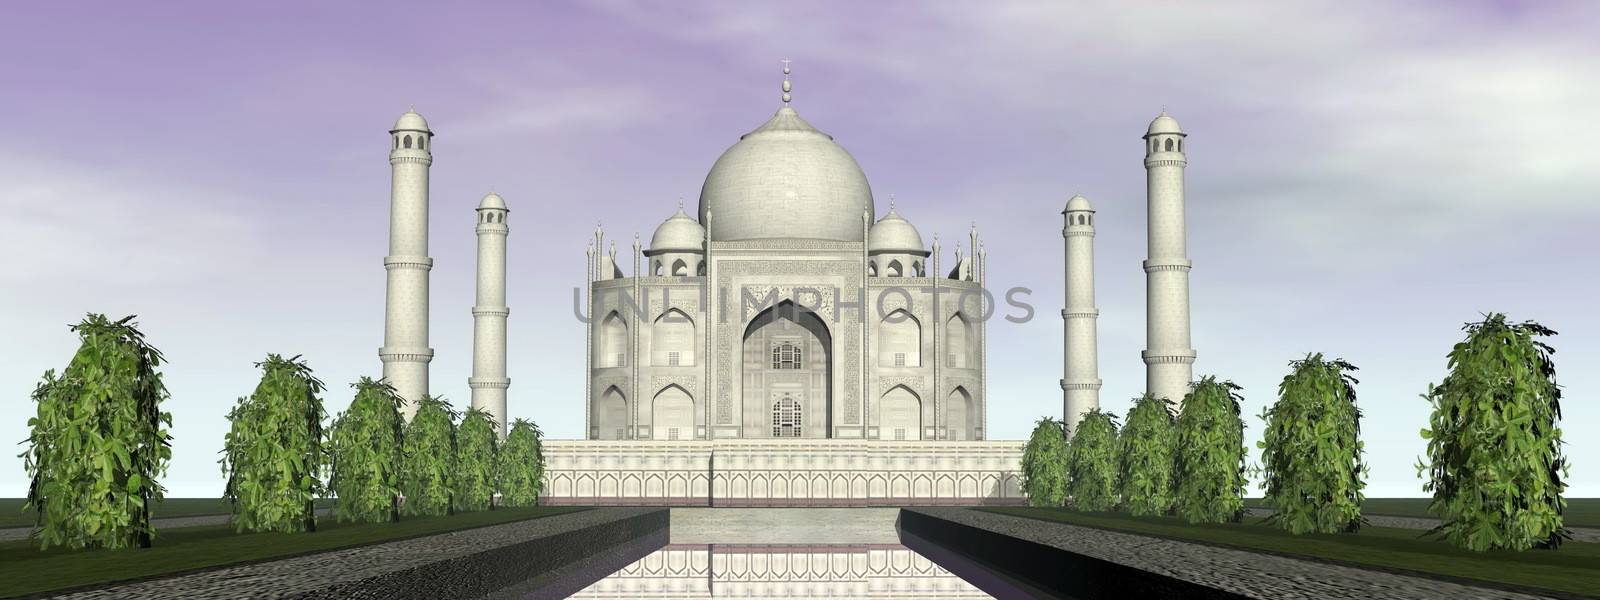 Famous Taj Mahal mausoleum and nature around, Agra, India